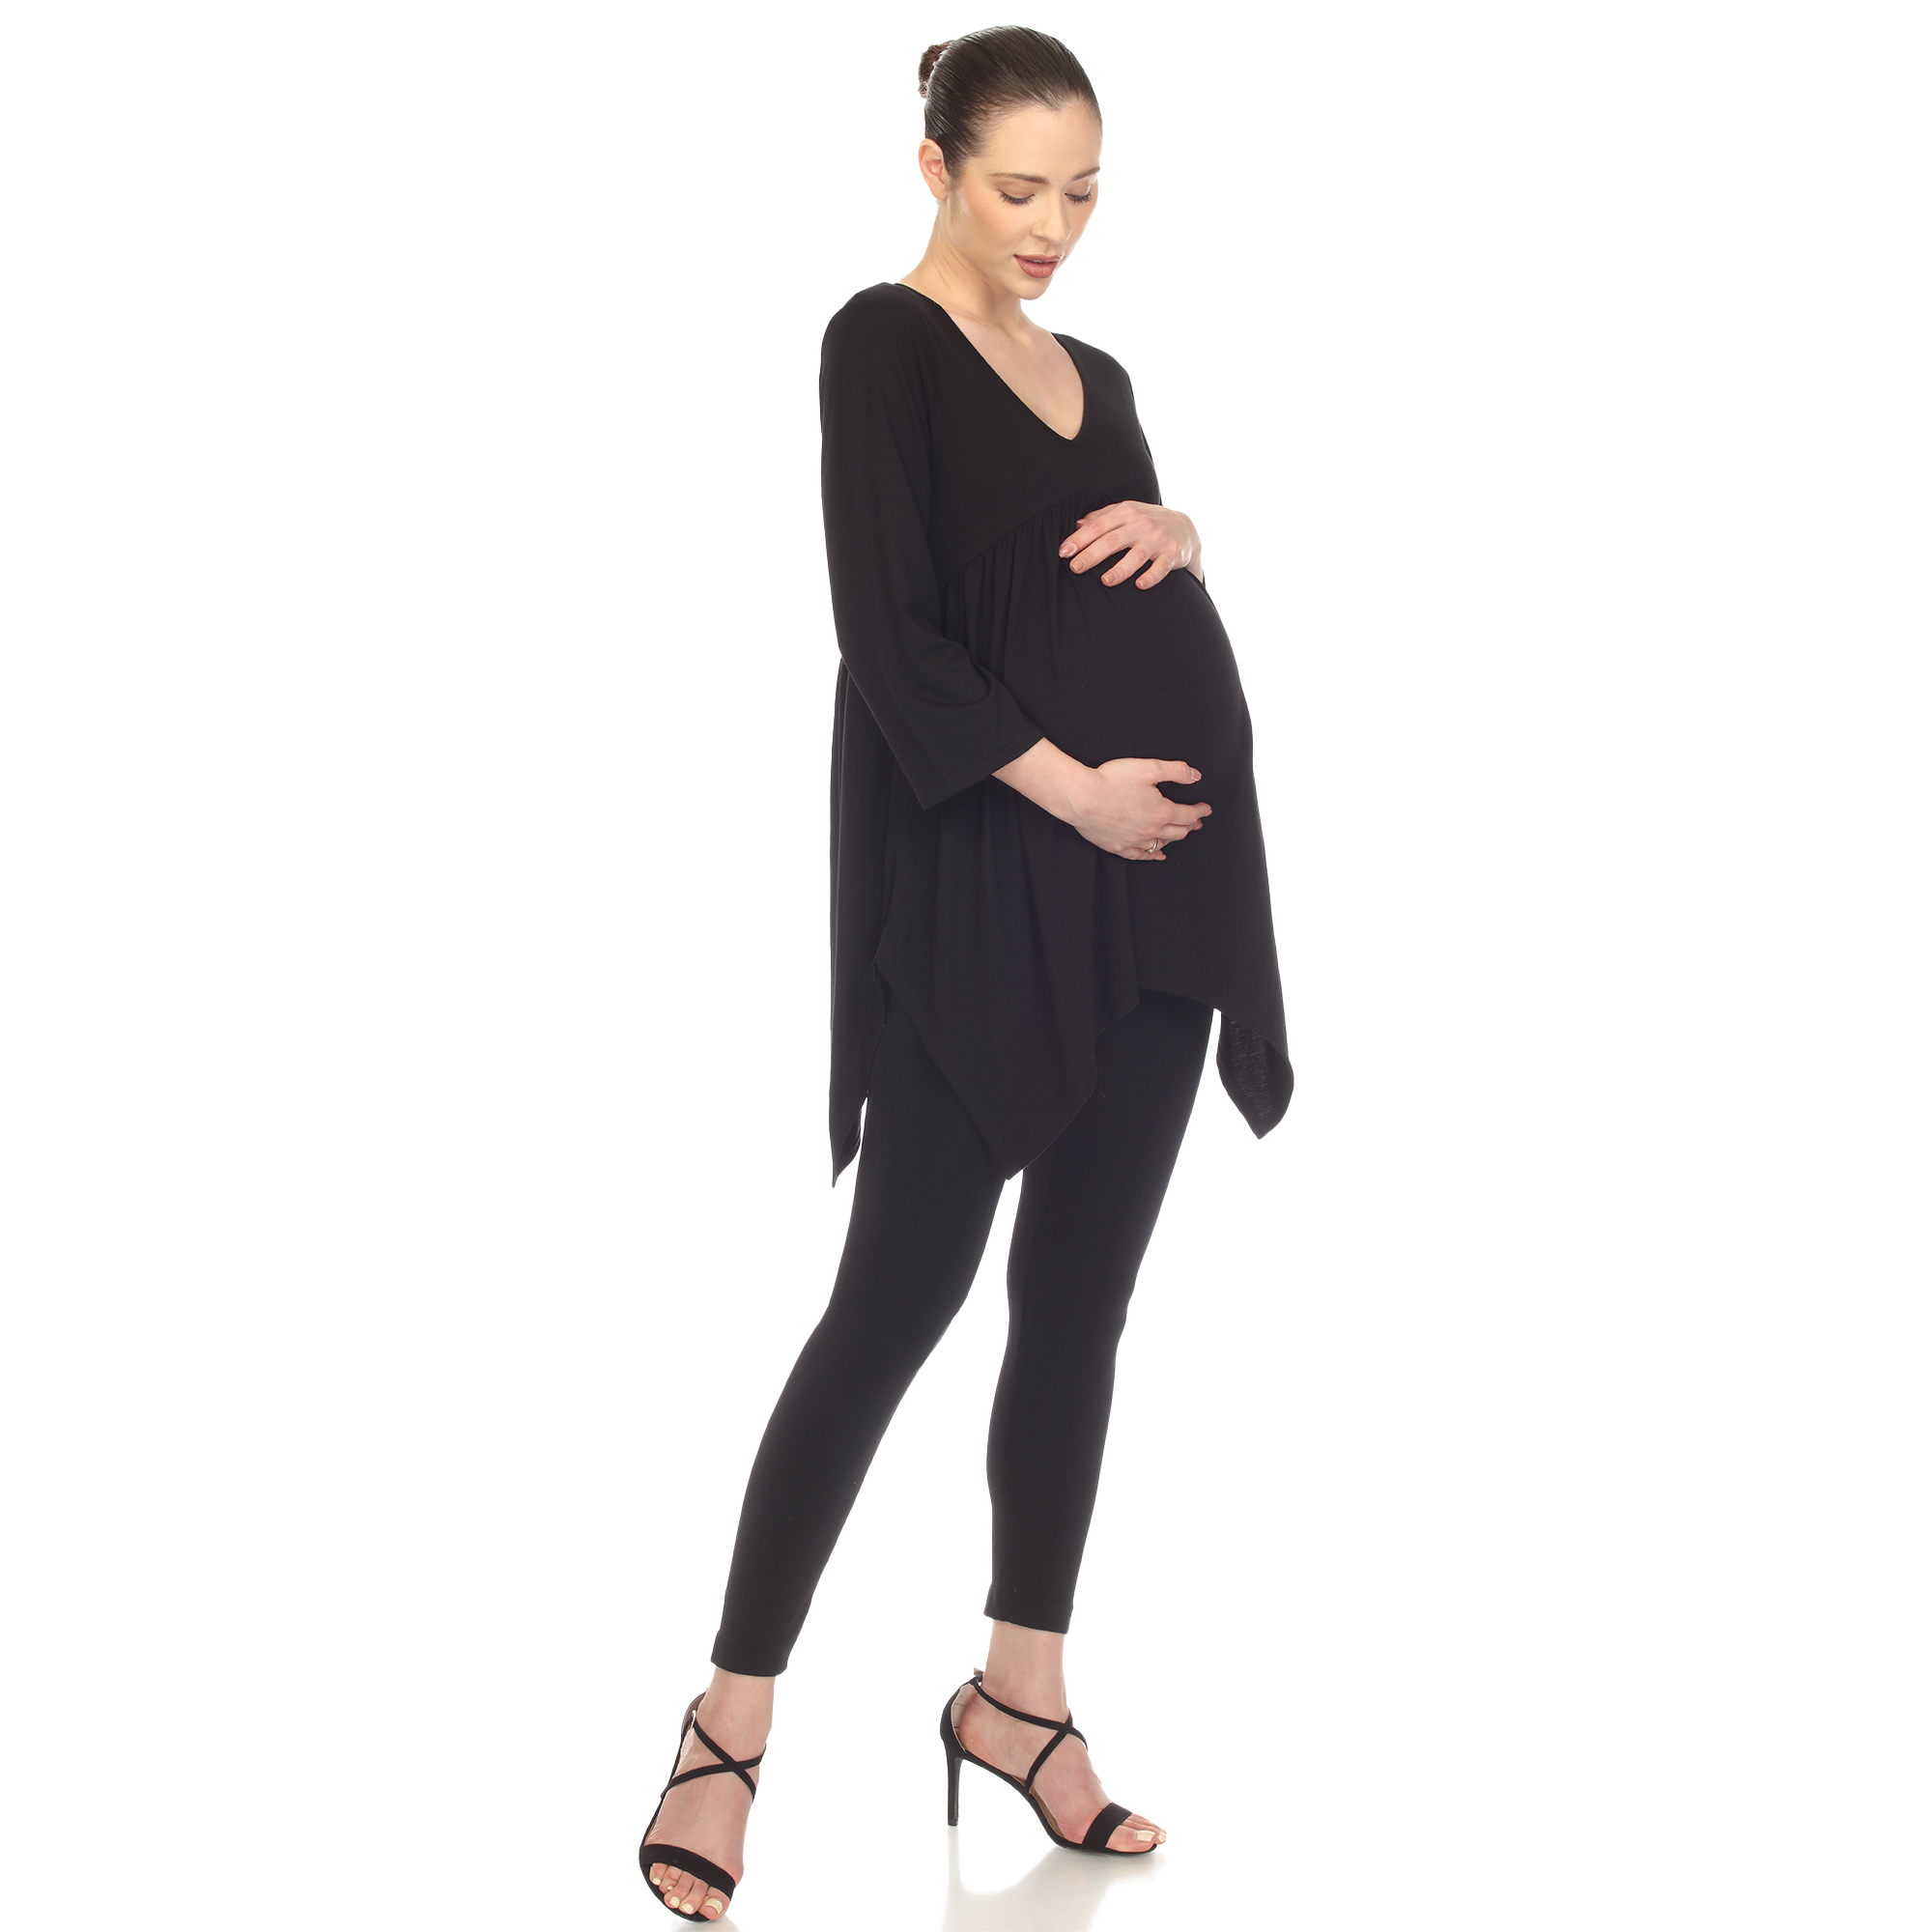 White Mark Women's Maternity Empire Waist V-Neck Tunic Top - Black, 3X